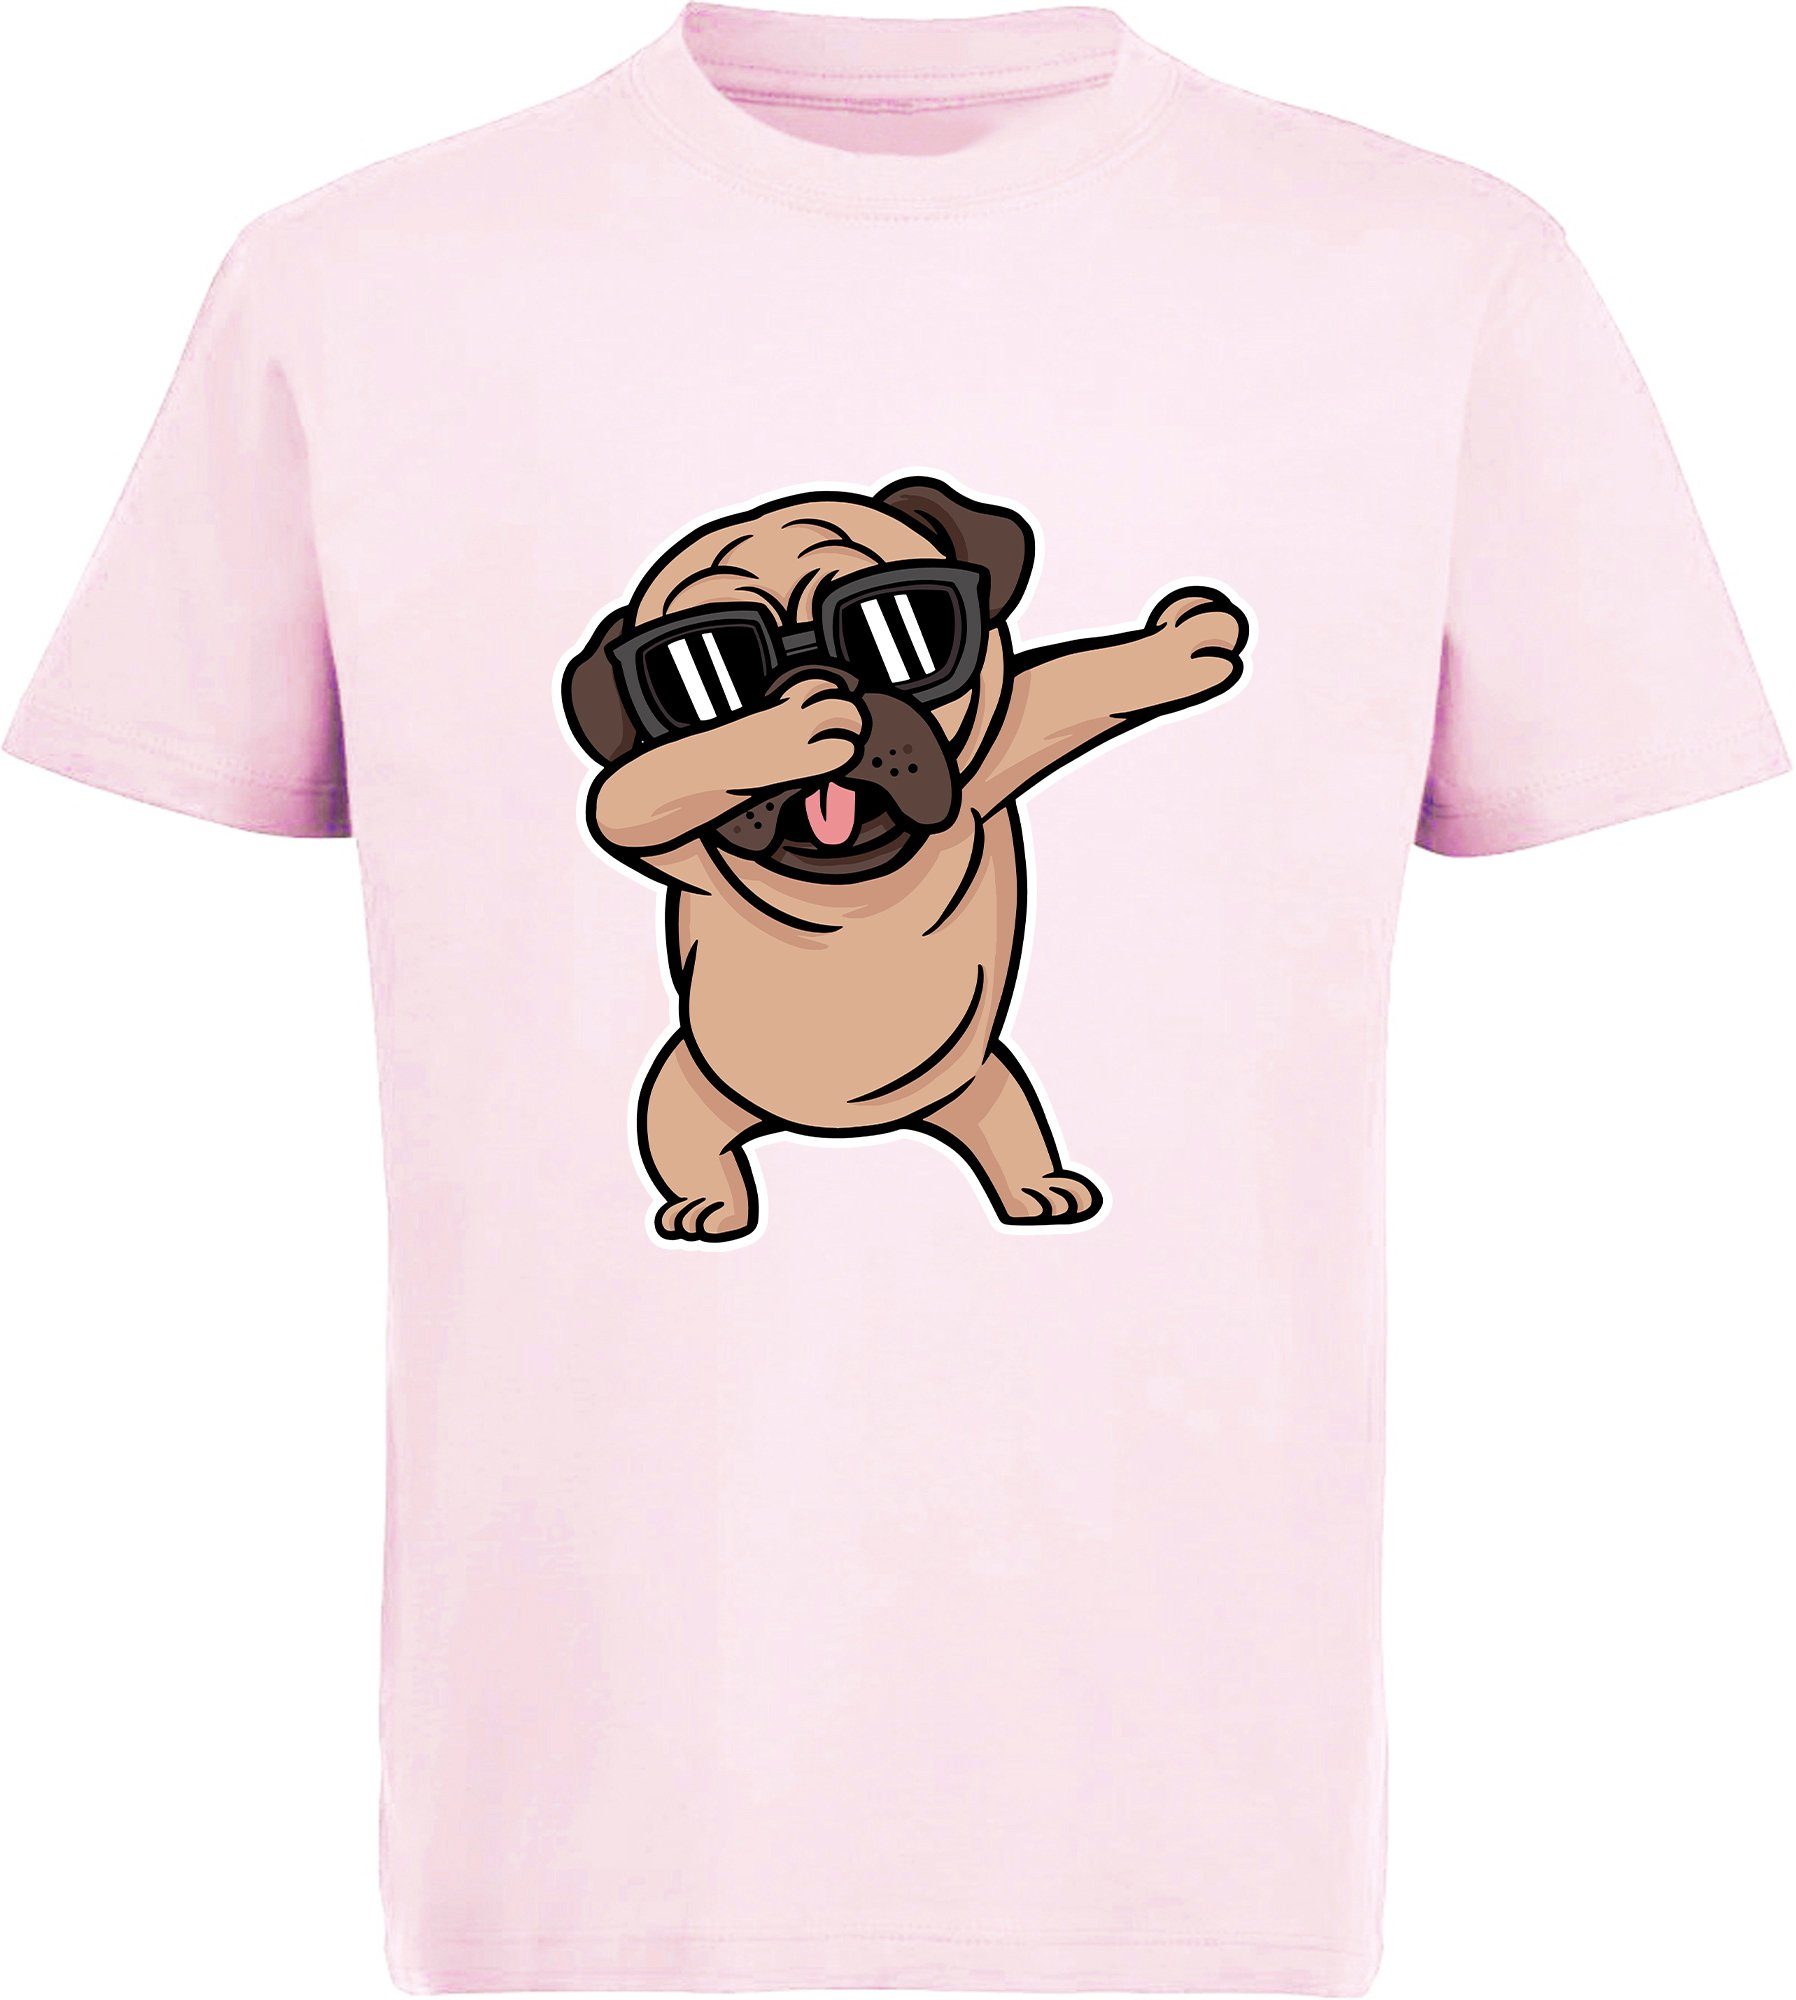 MyDesign24 Print-Shirt Kinder Hunde T-Shirt bedruckt - dab tanzender Hund Baumwollshirt mit Aufdruck, i238 rosa